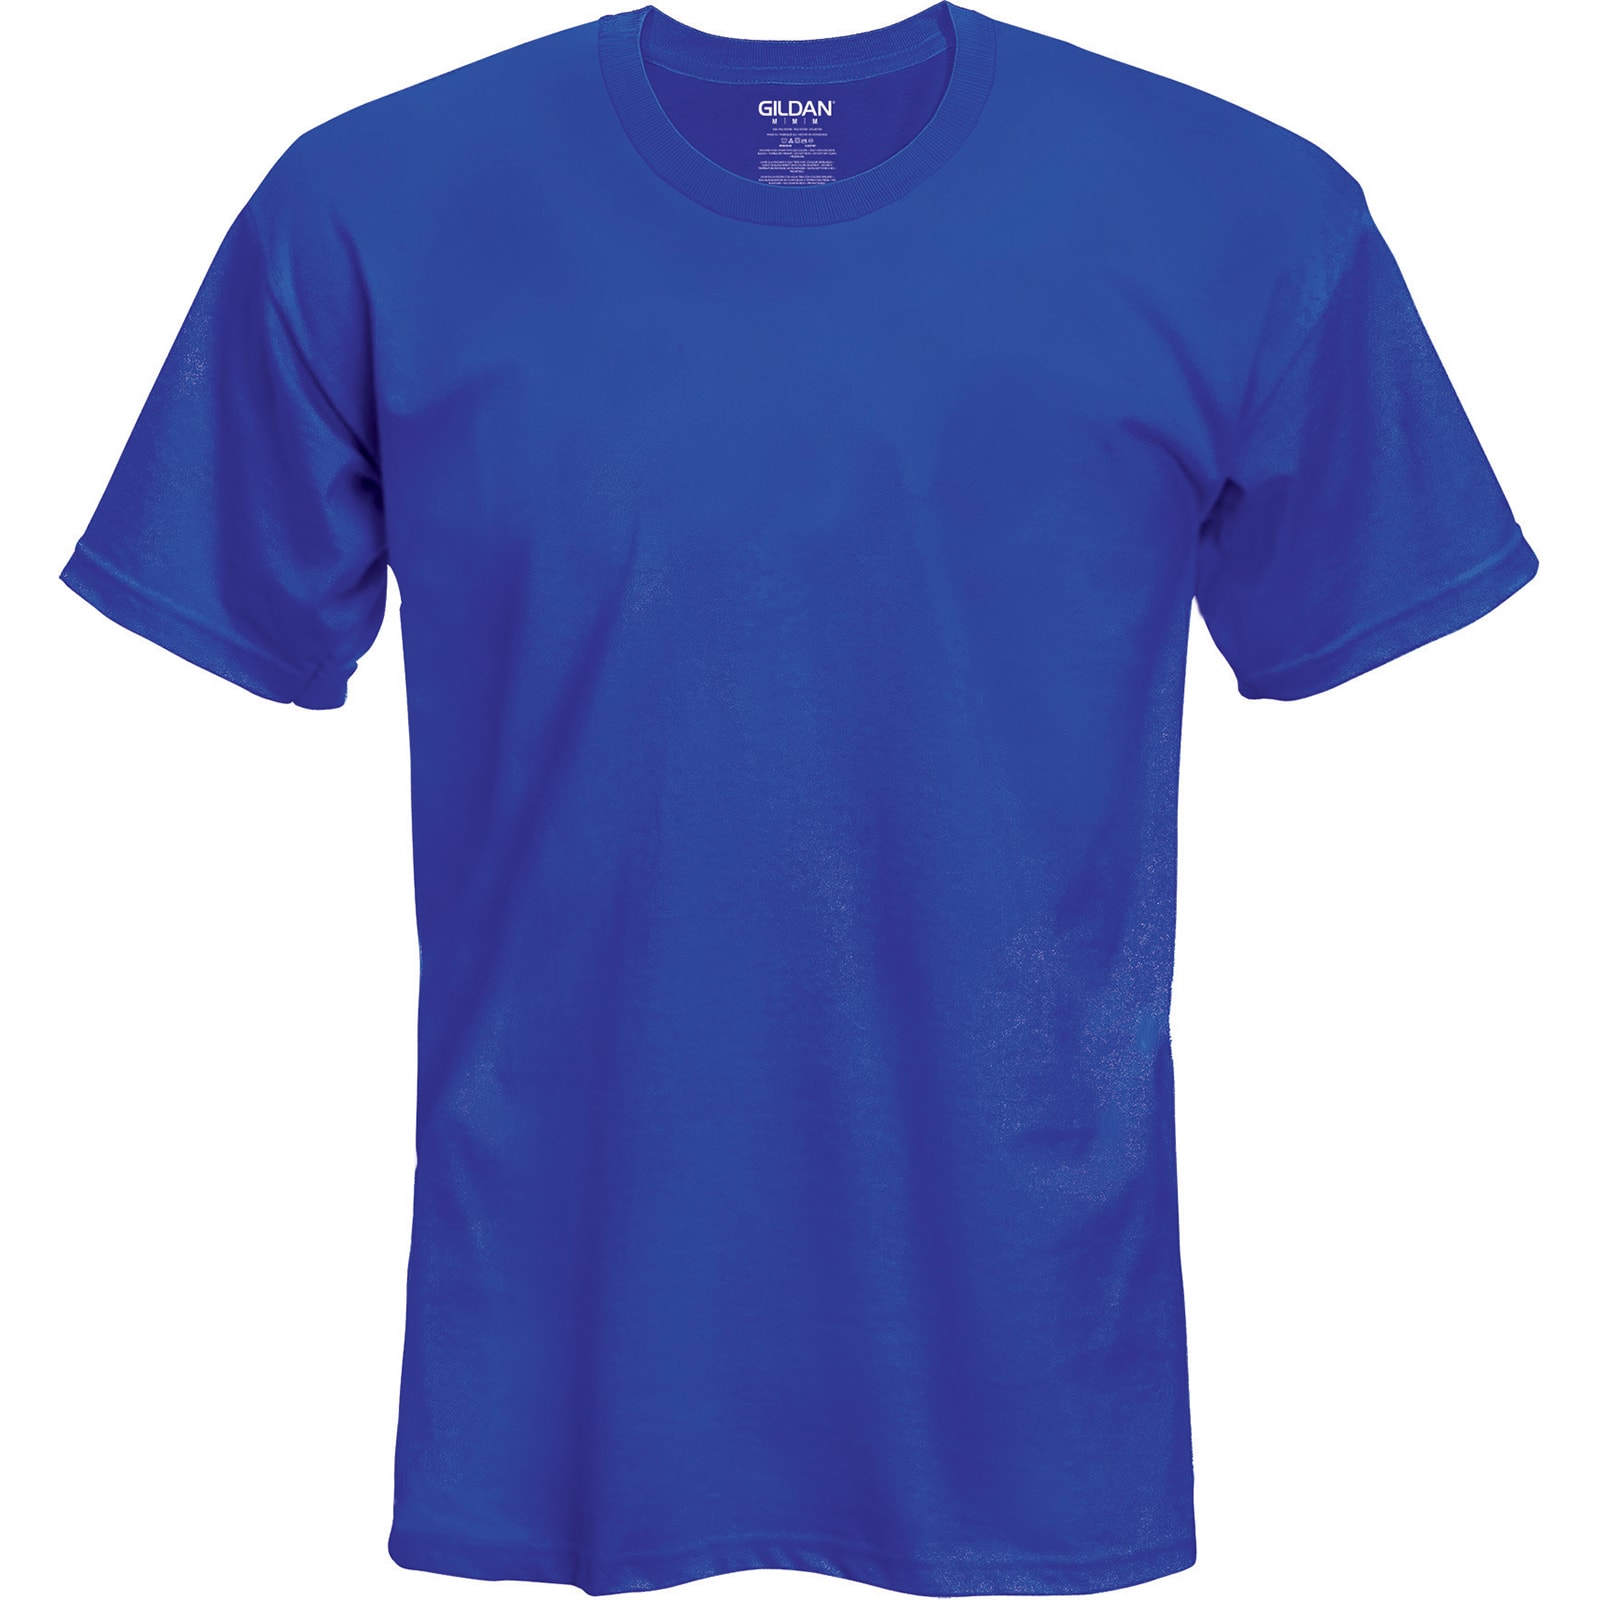 Kid N Me Sportswear Jersey size S 6/8 Boys Athletic Solid Kids Shirt Top Tee 